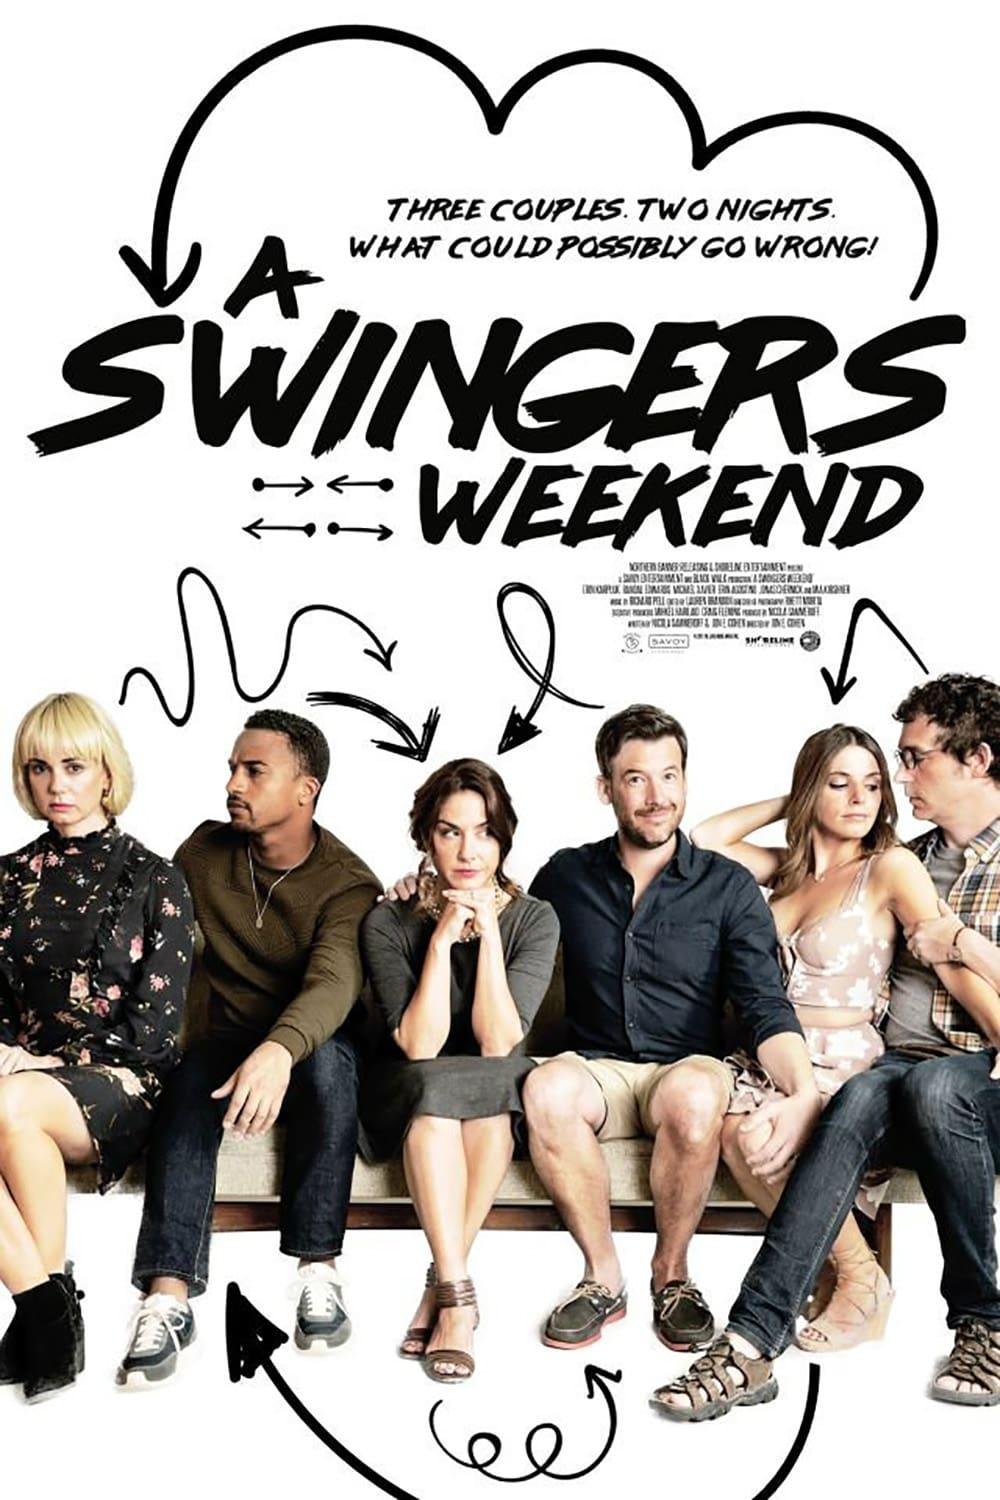 A Swingers Weekend poster